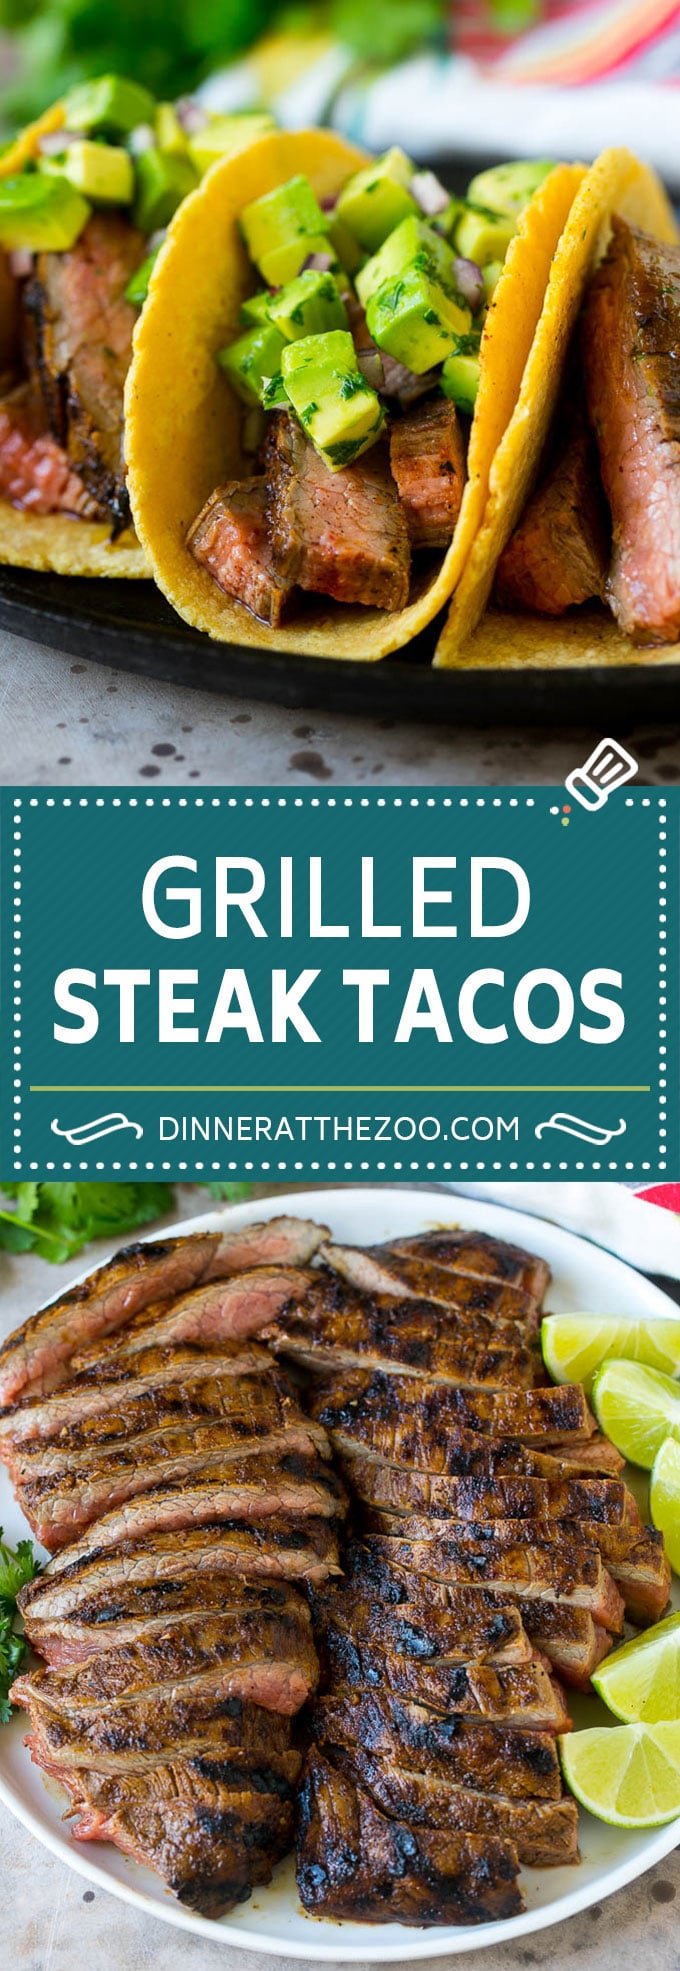 Steak Tacos Recipe | Beef Tacos | Grilled Steak #steak #tacos #tacotuesday #avocado #dinner #dinneratthezoo